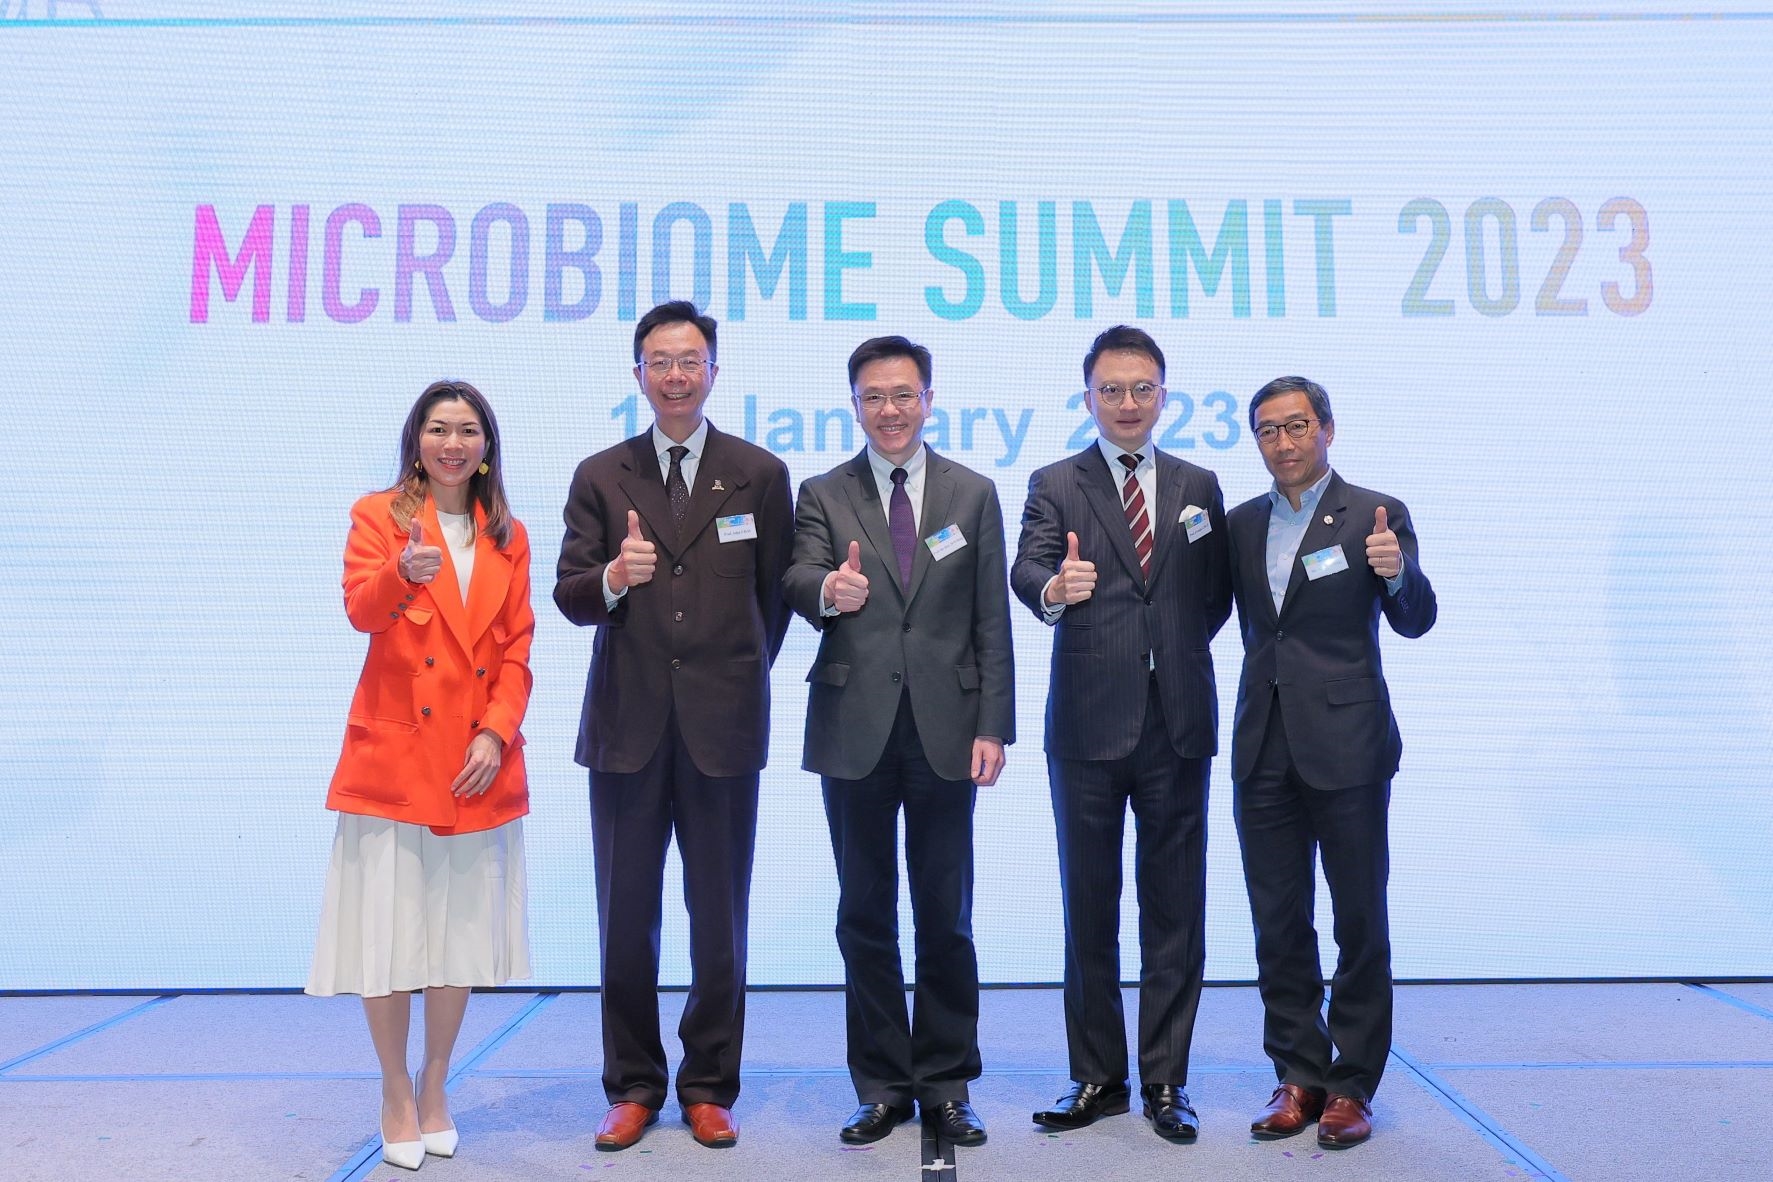 Microbiome Summit 2023